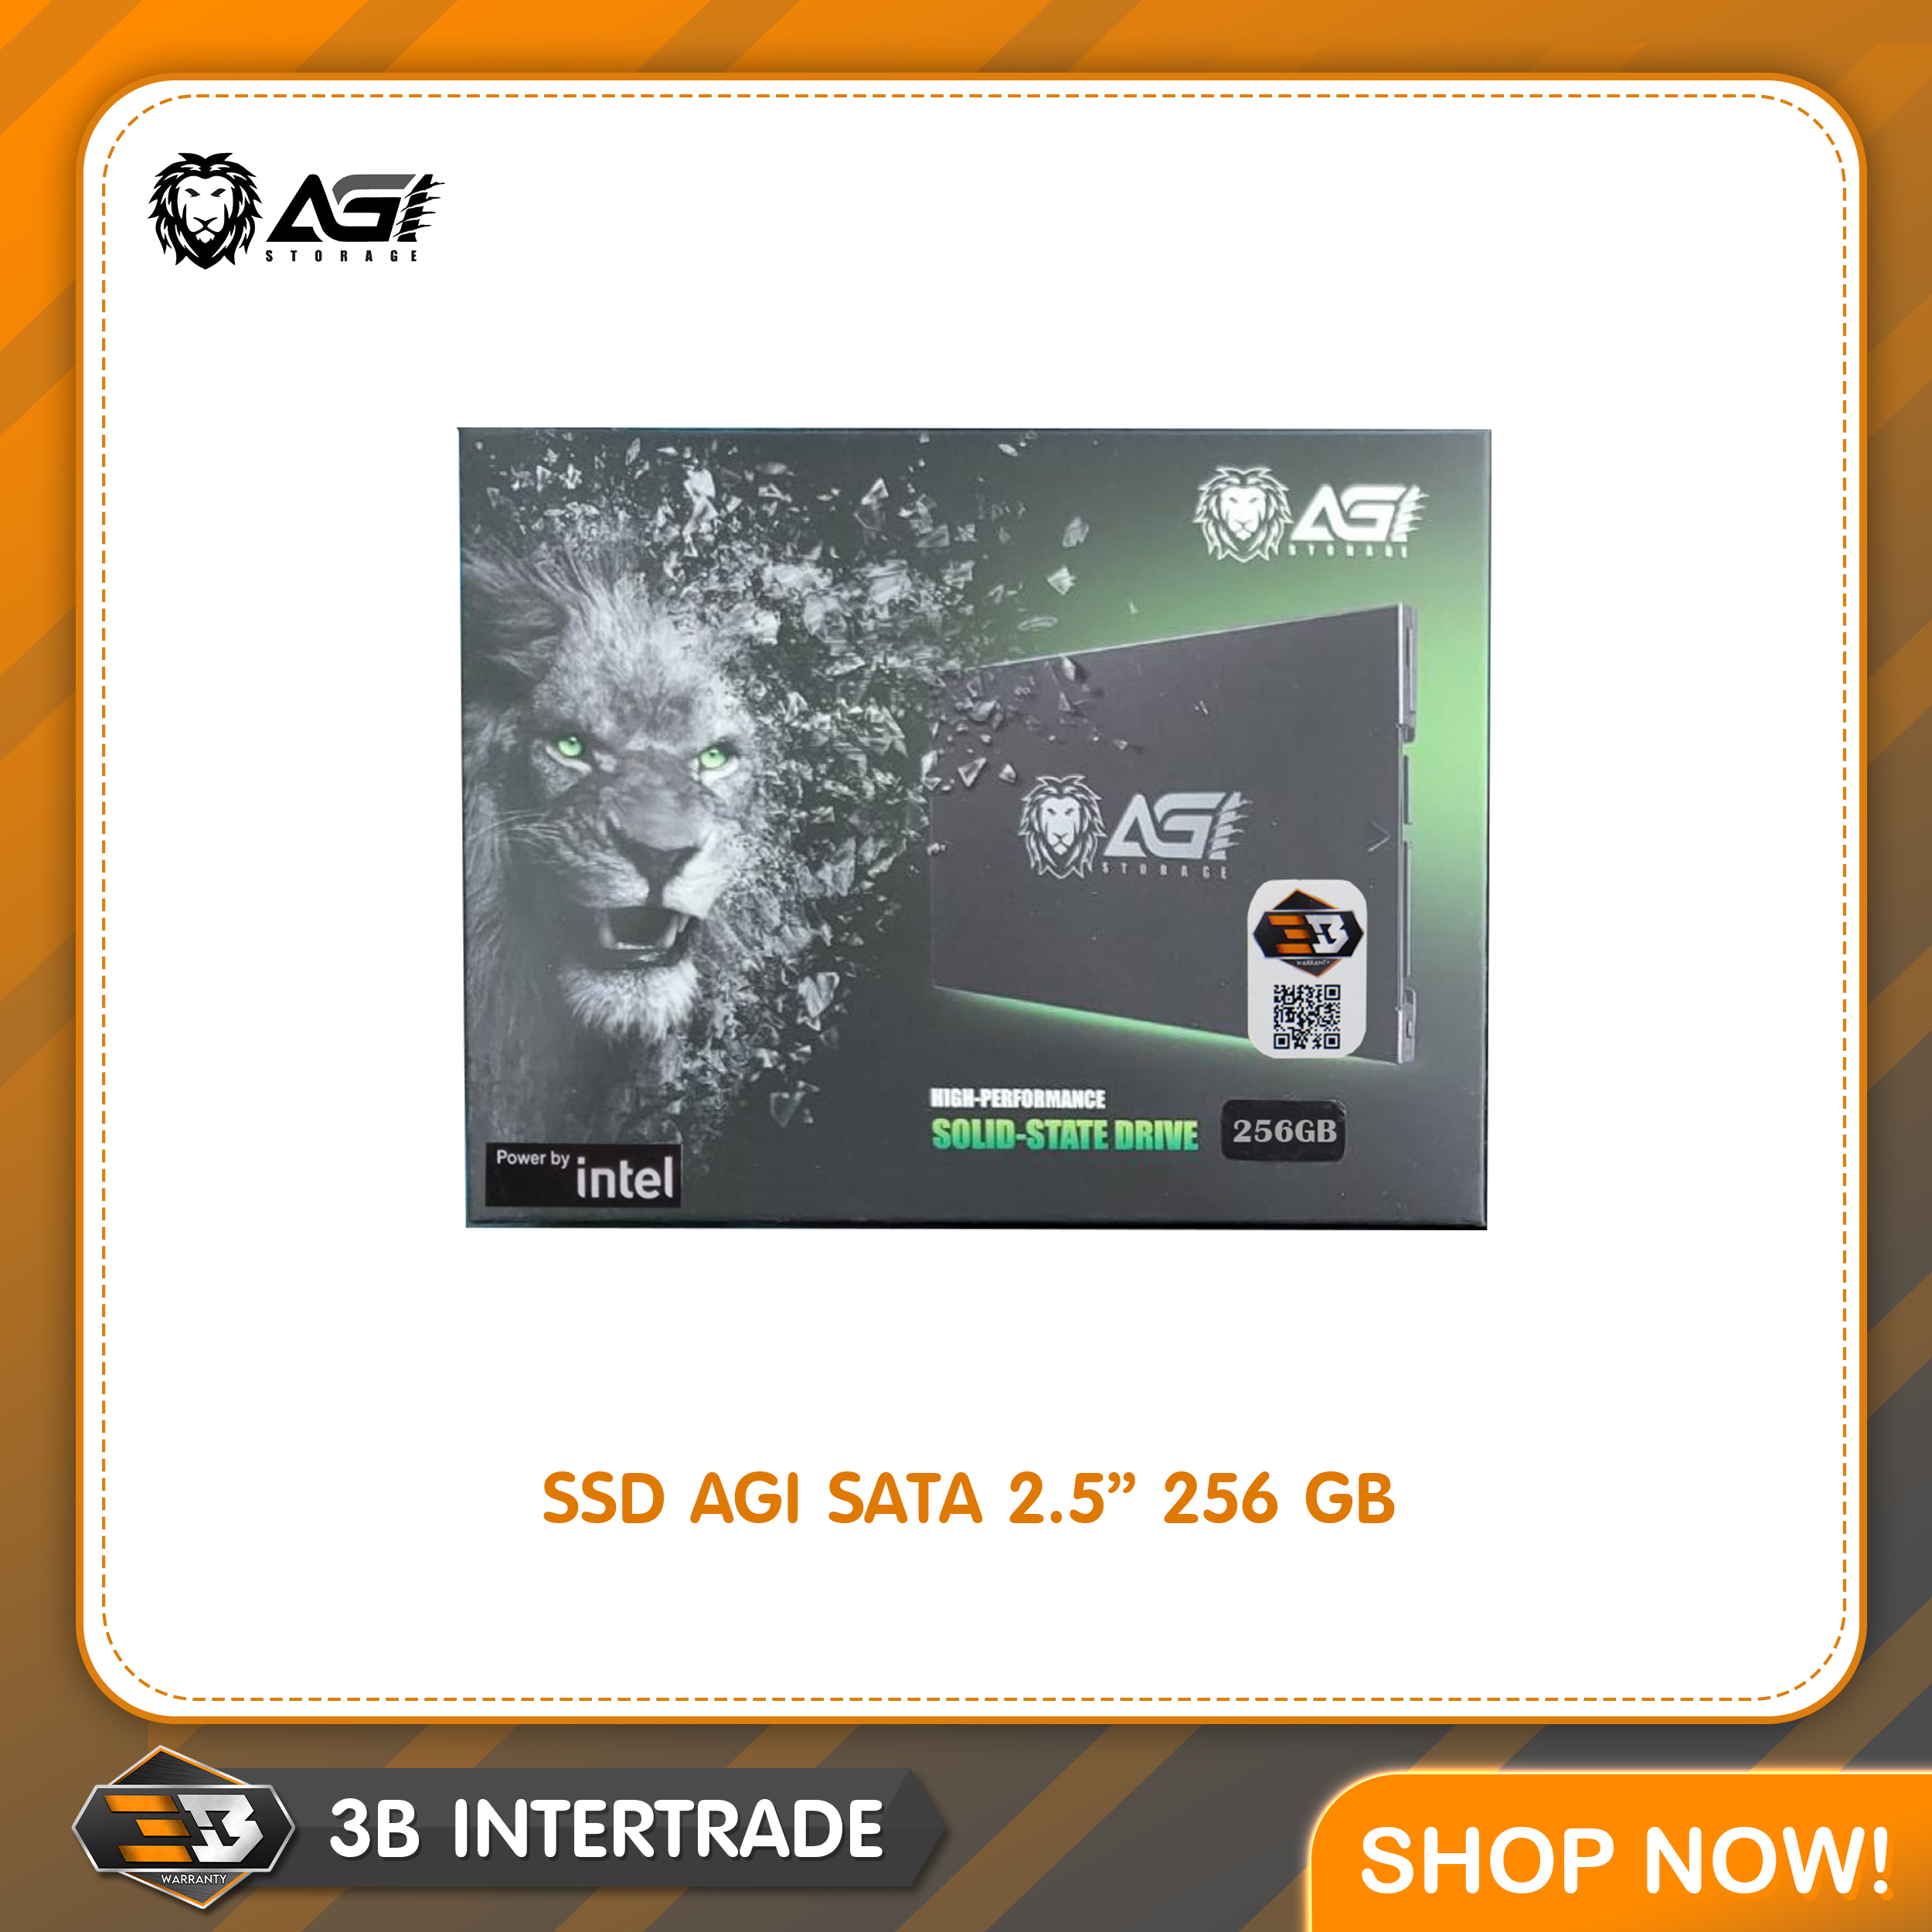 SSD AGI SATA 256GB